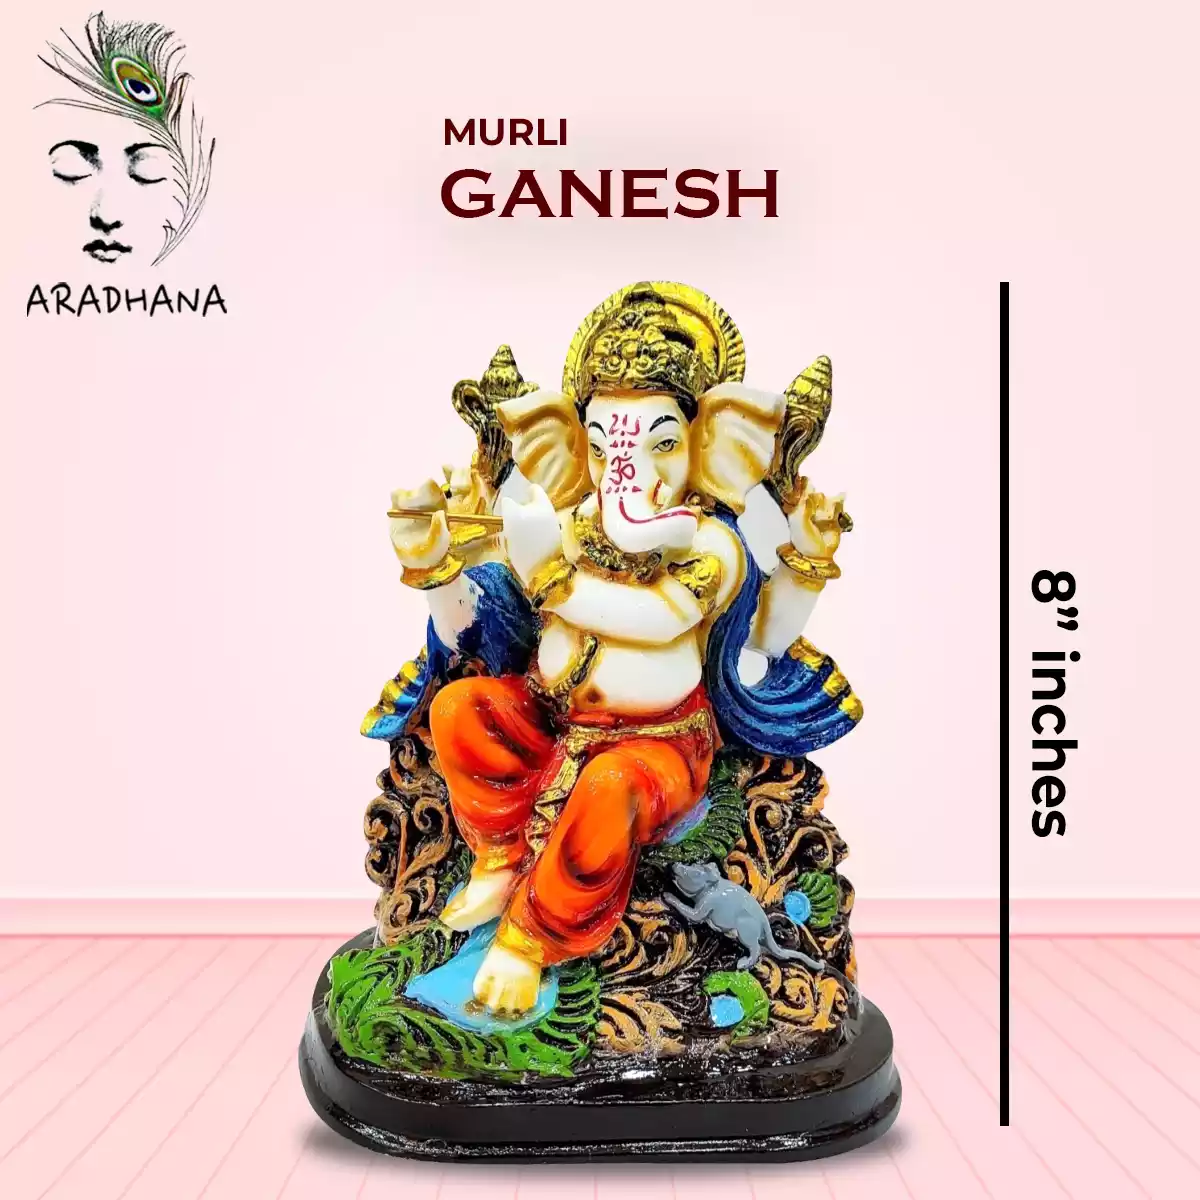 Murli Ganesh